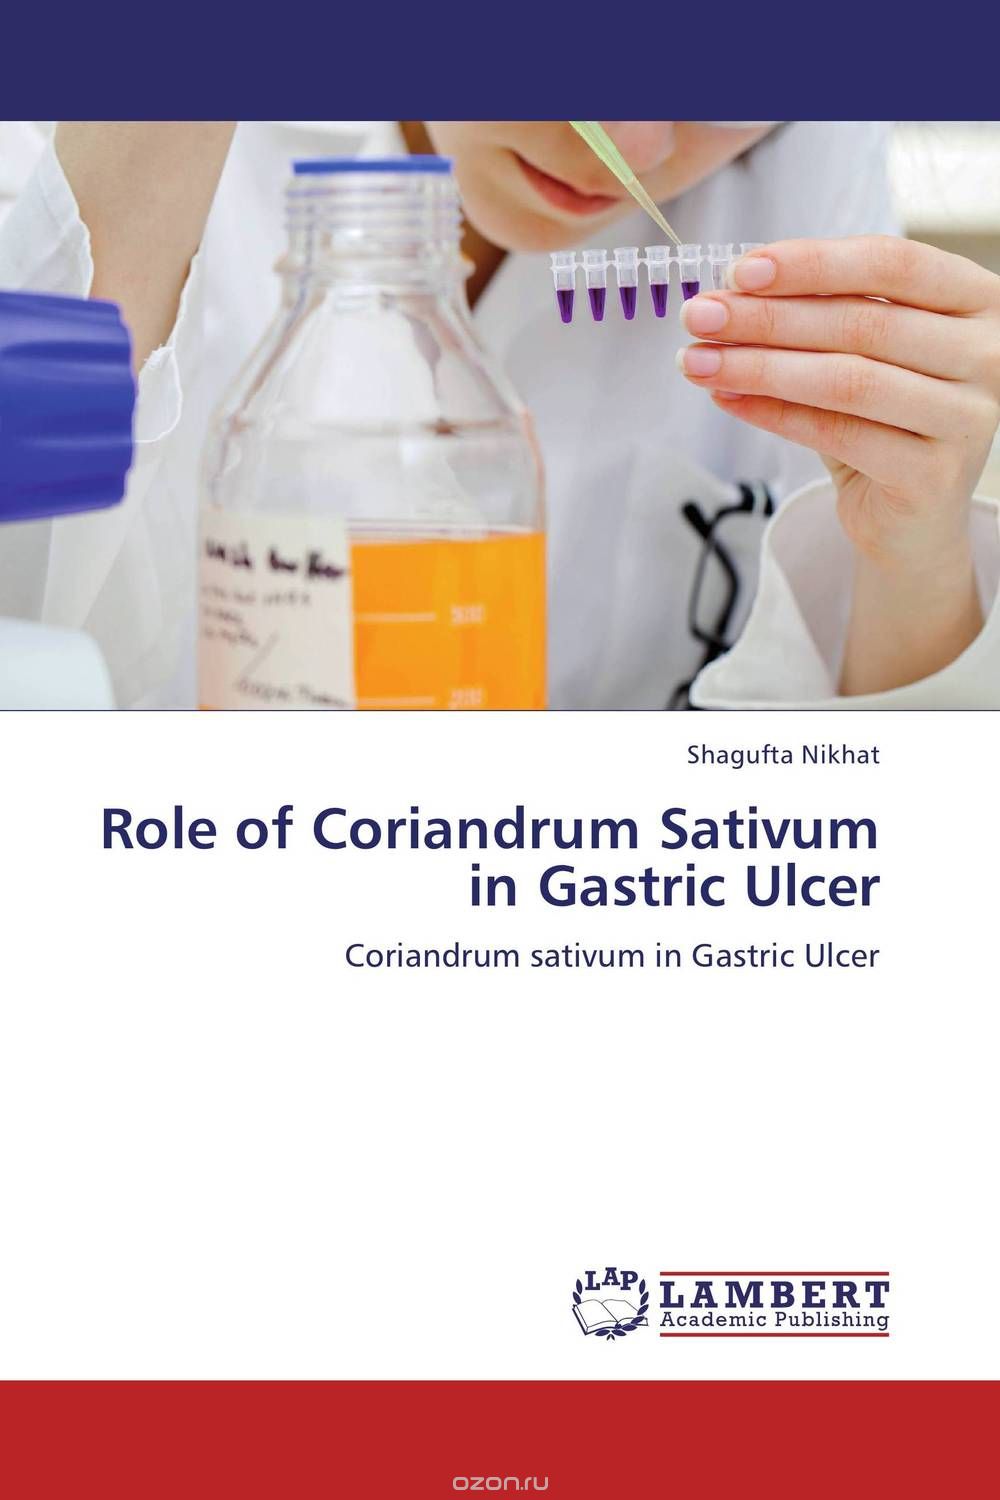 Скачать книгу "Role of Coriandrum Sativum in Gastric Ulcer"